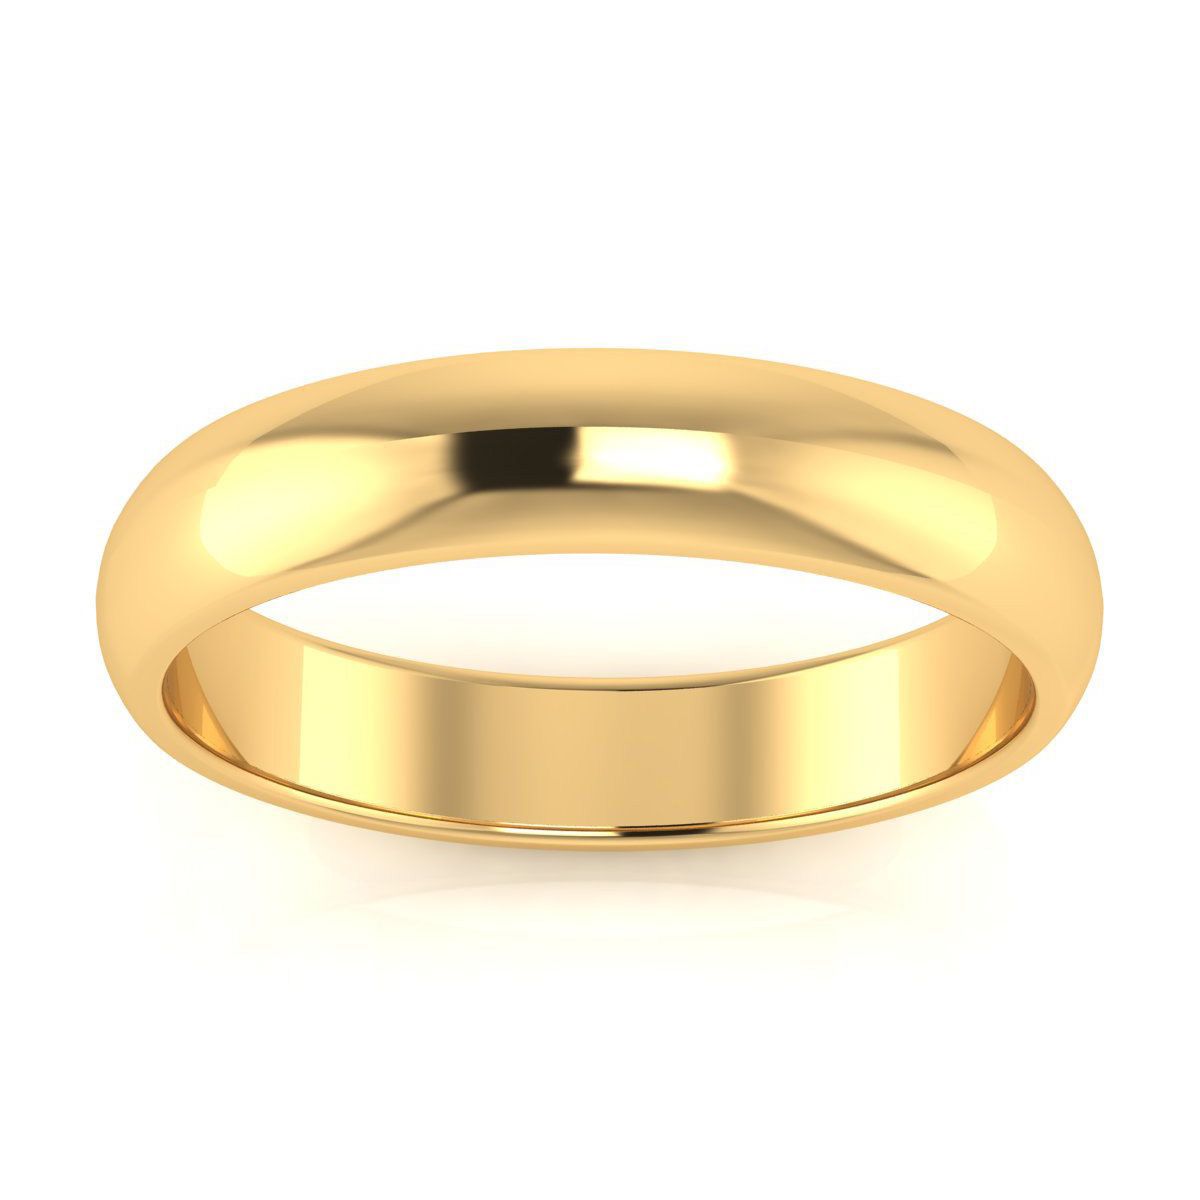 Mens 10K Yellow Gold 4mm Edged Half Round Wedding Band Ring 